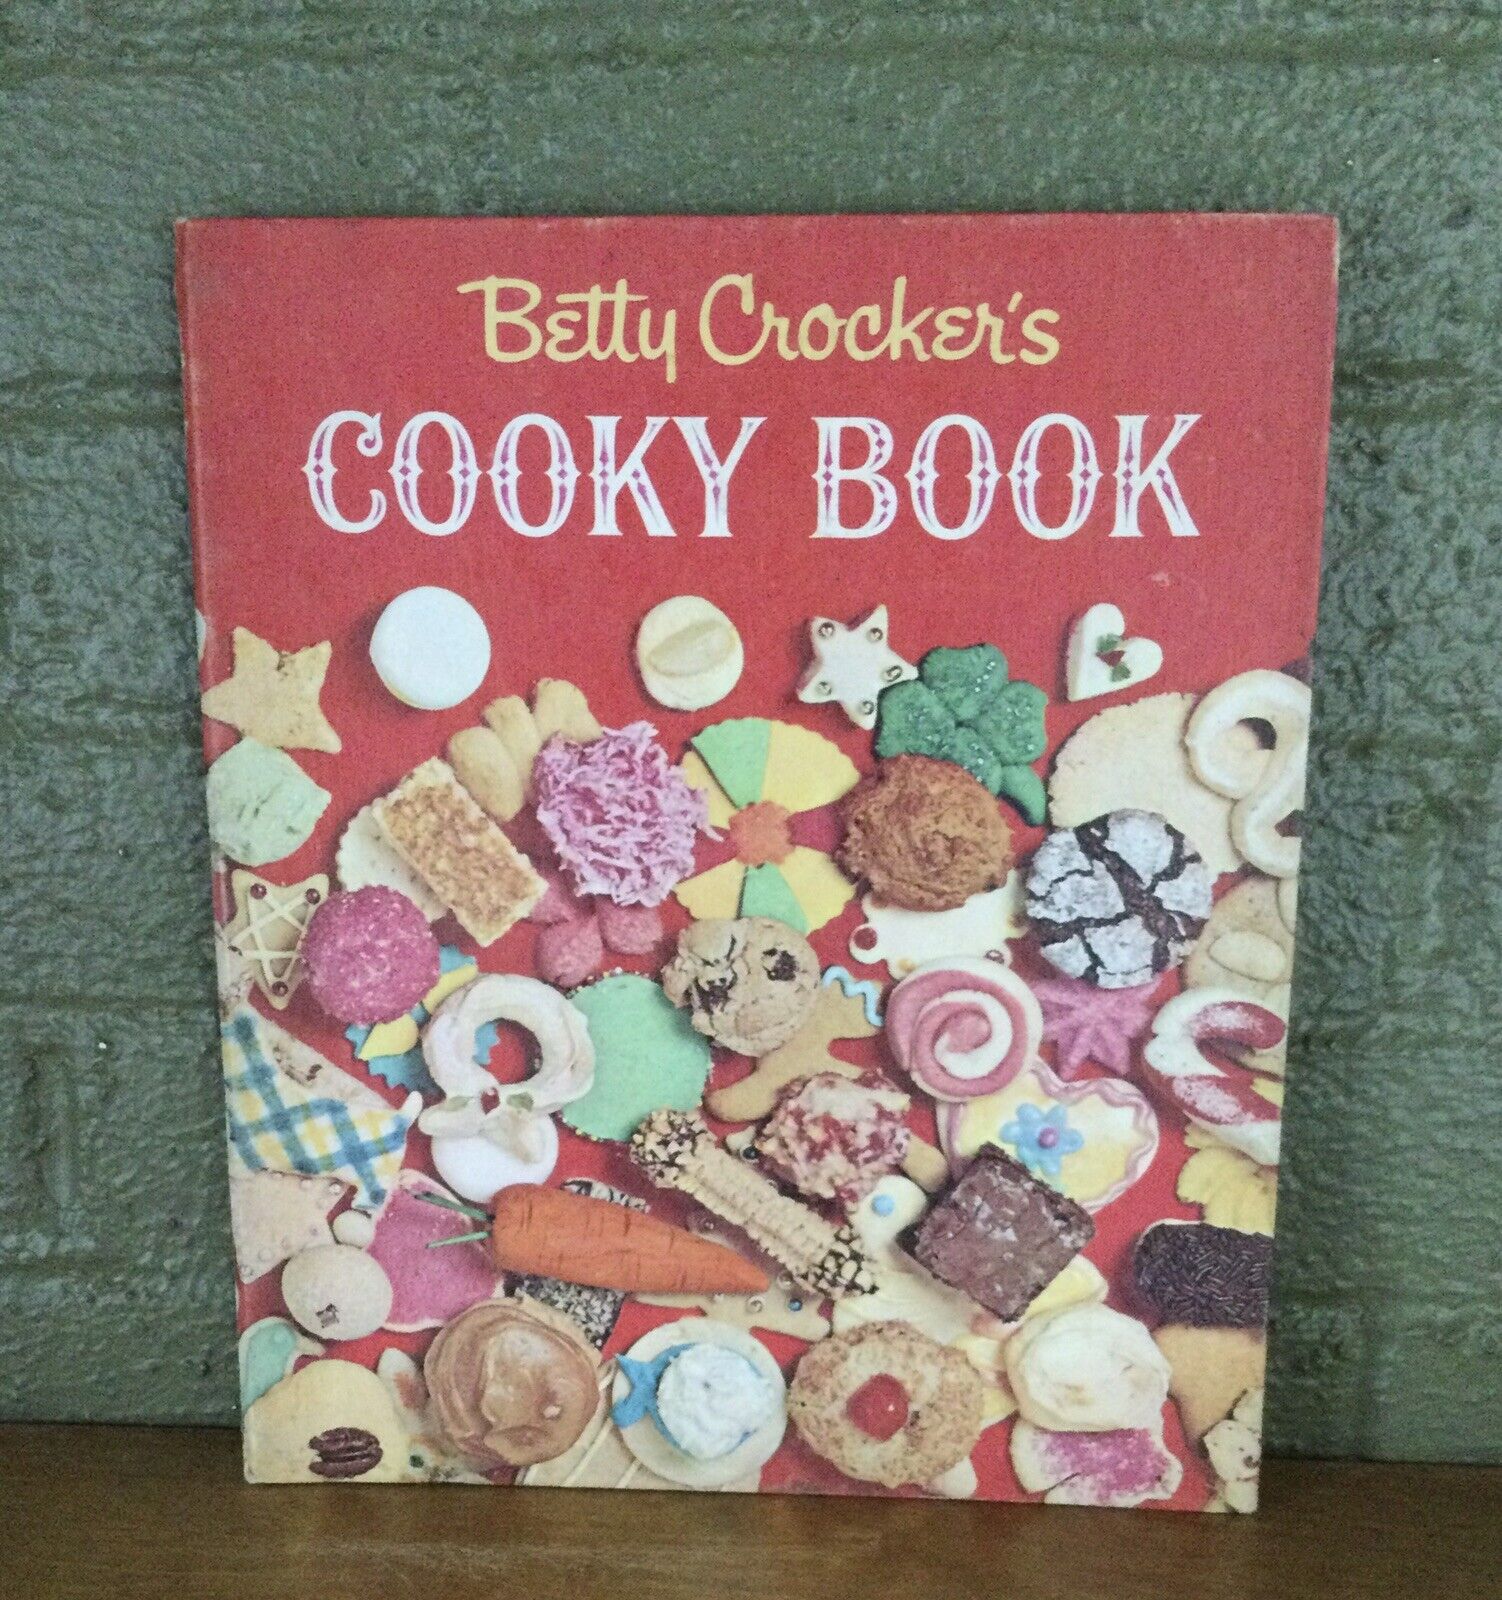 Betty Crocker’s Vintage 1963 Cook Book First Edition First Printing Spiral Bound